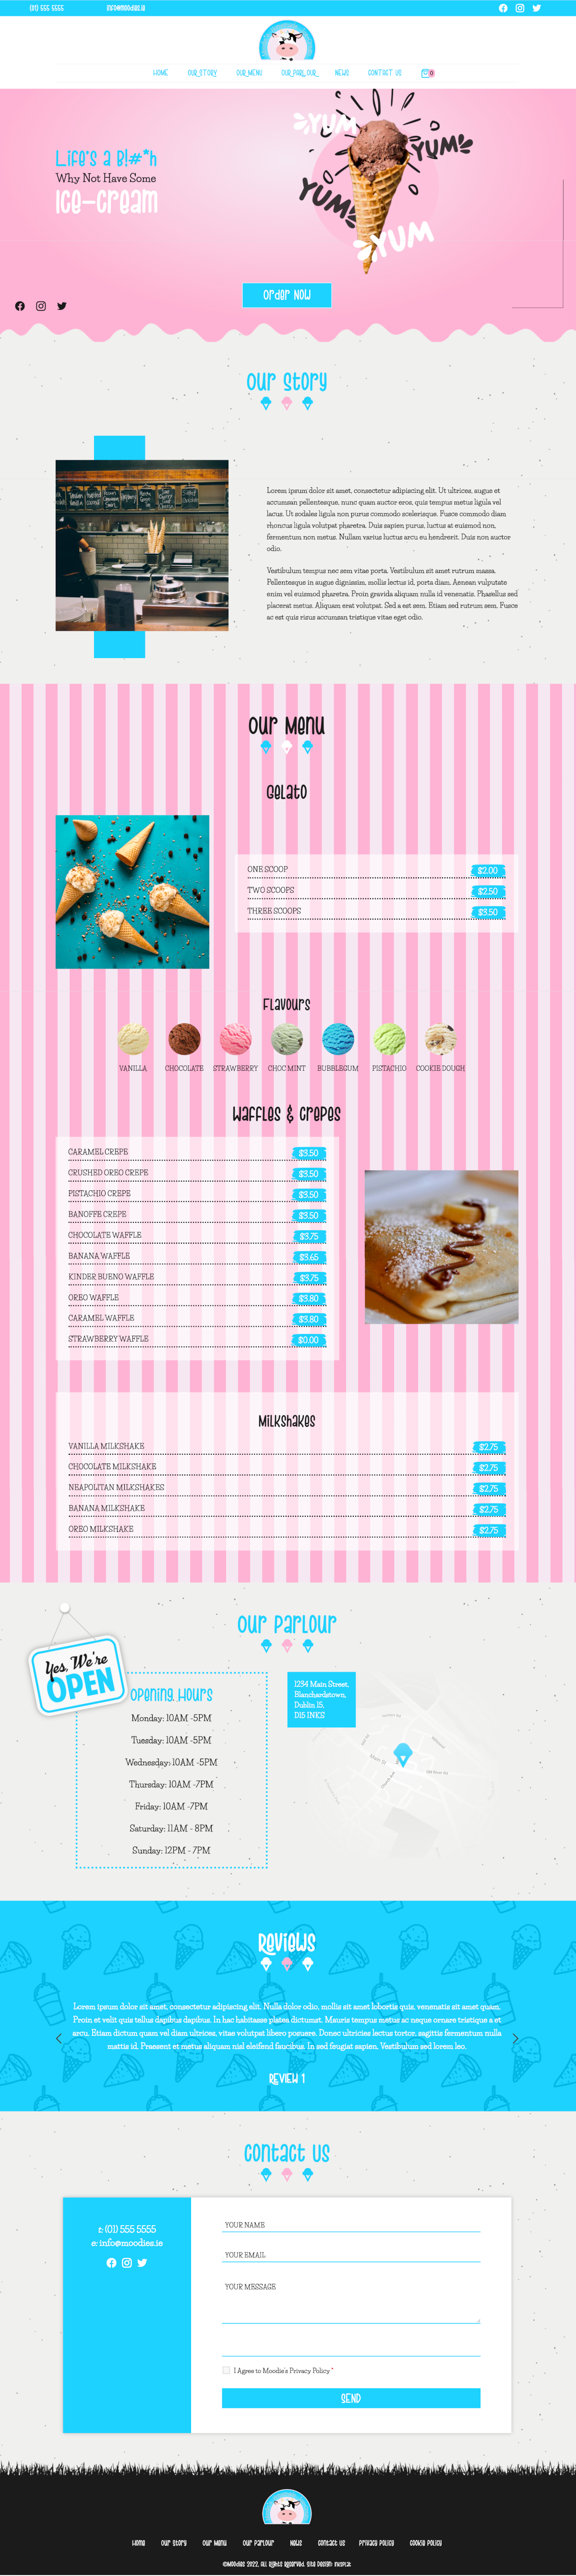 Ice-cream parlour web design Dublin